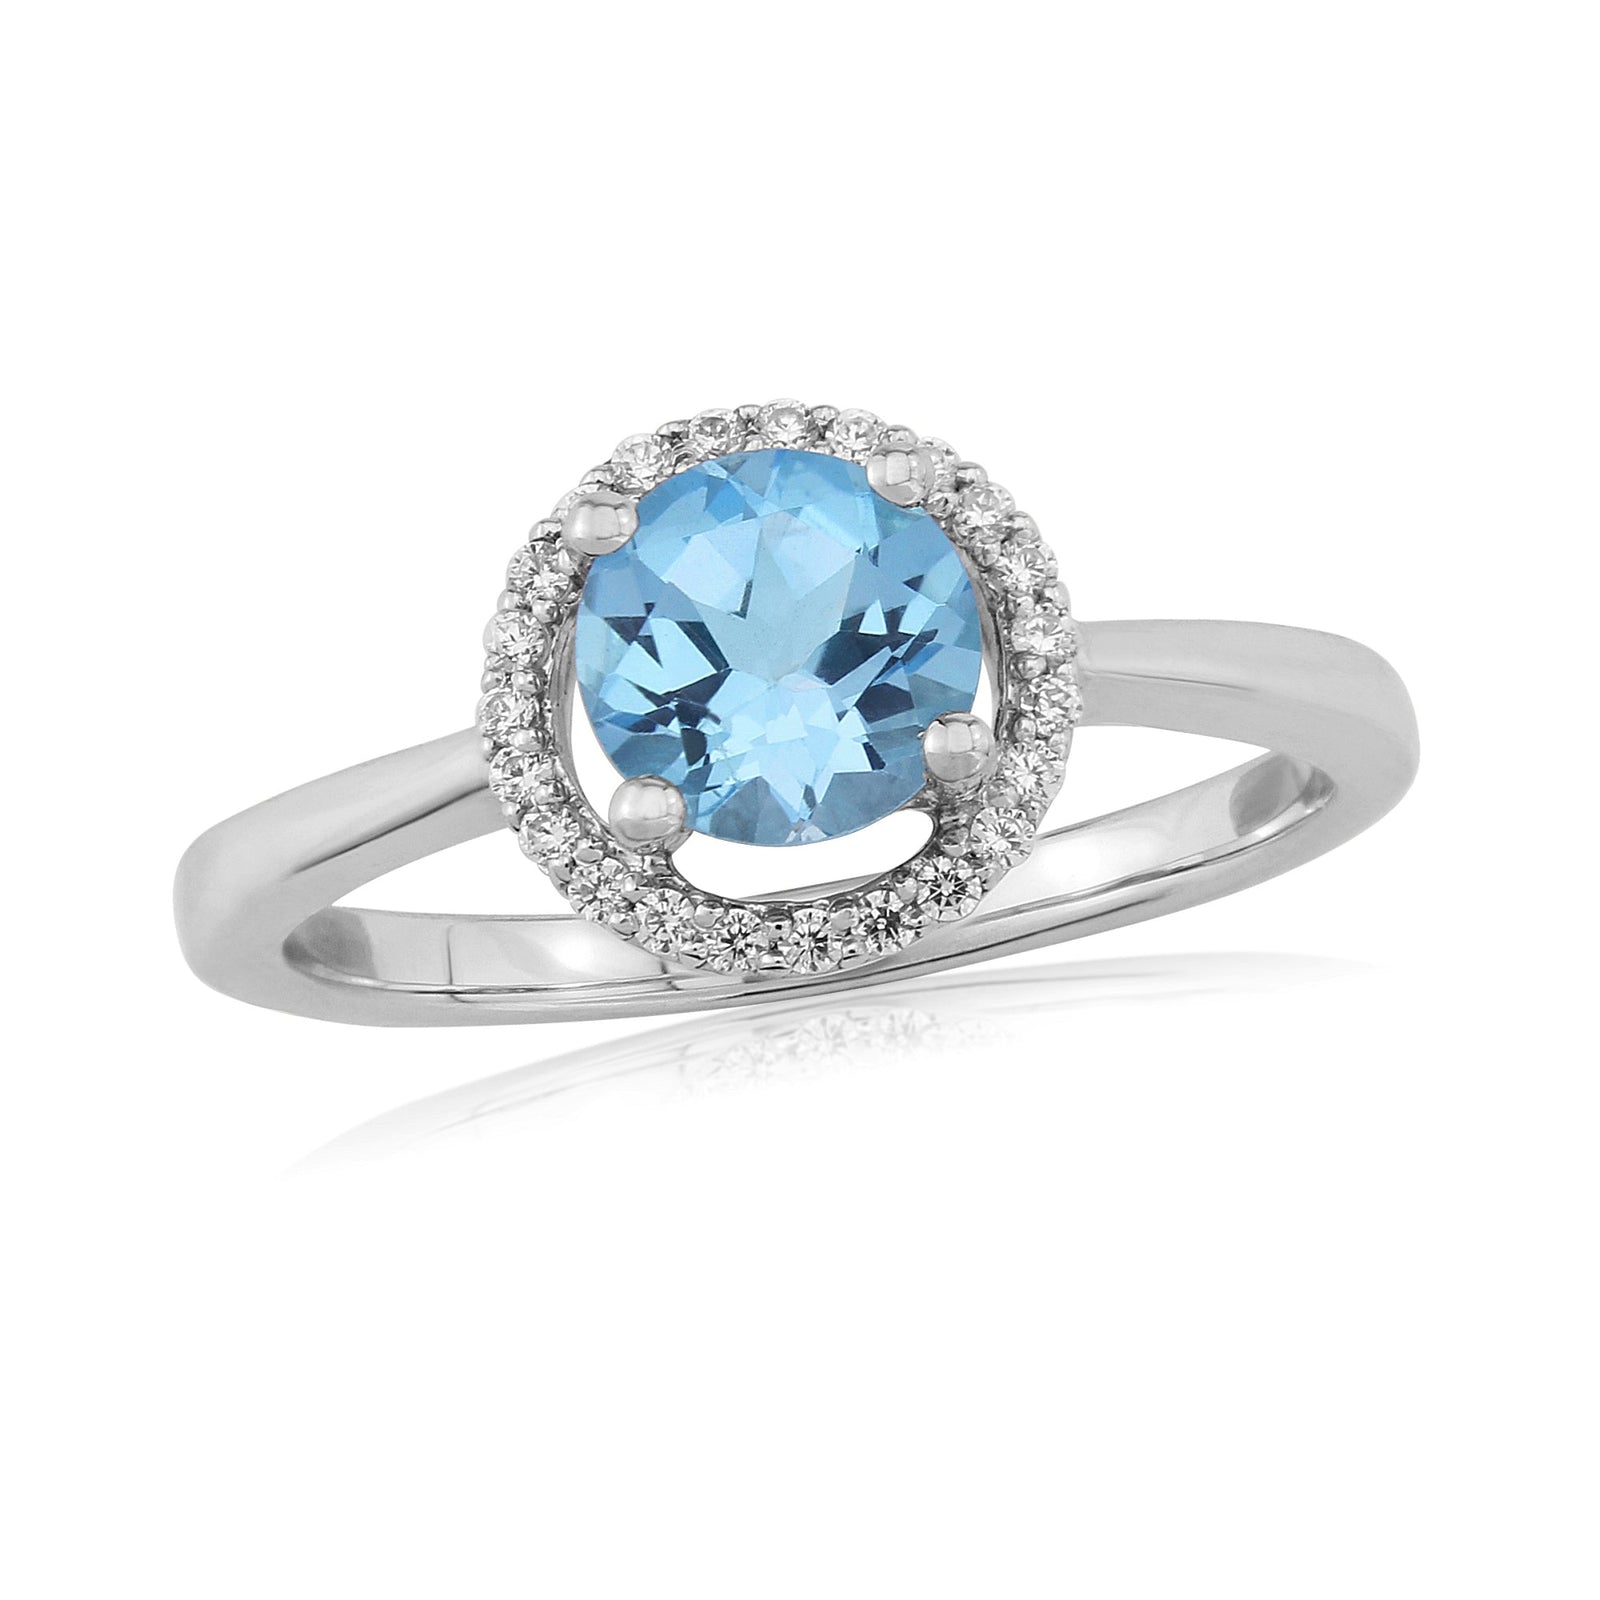 9ct white gold 6mm round blue topaz & diamond halo ring 0.10ct